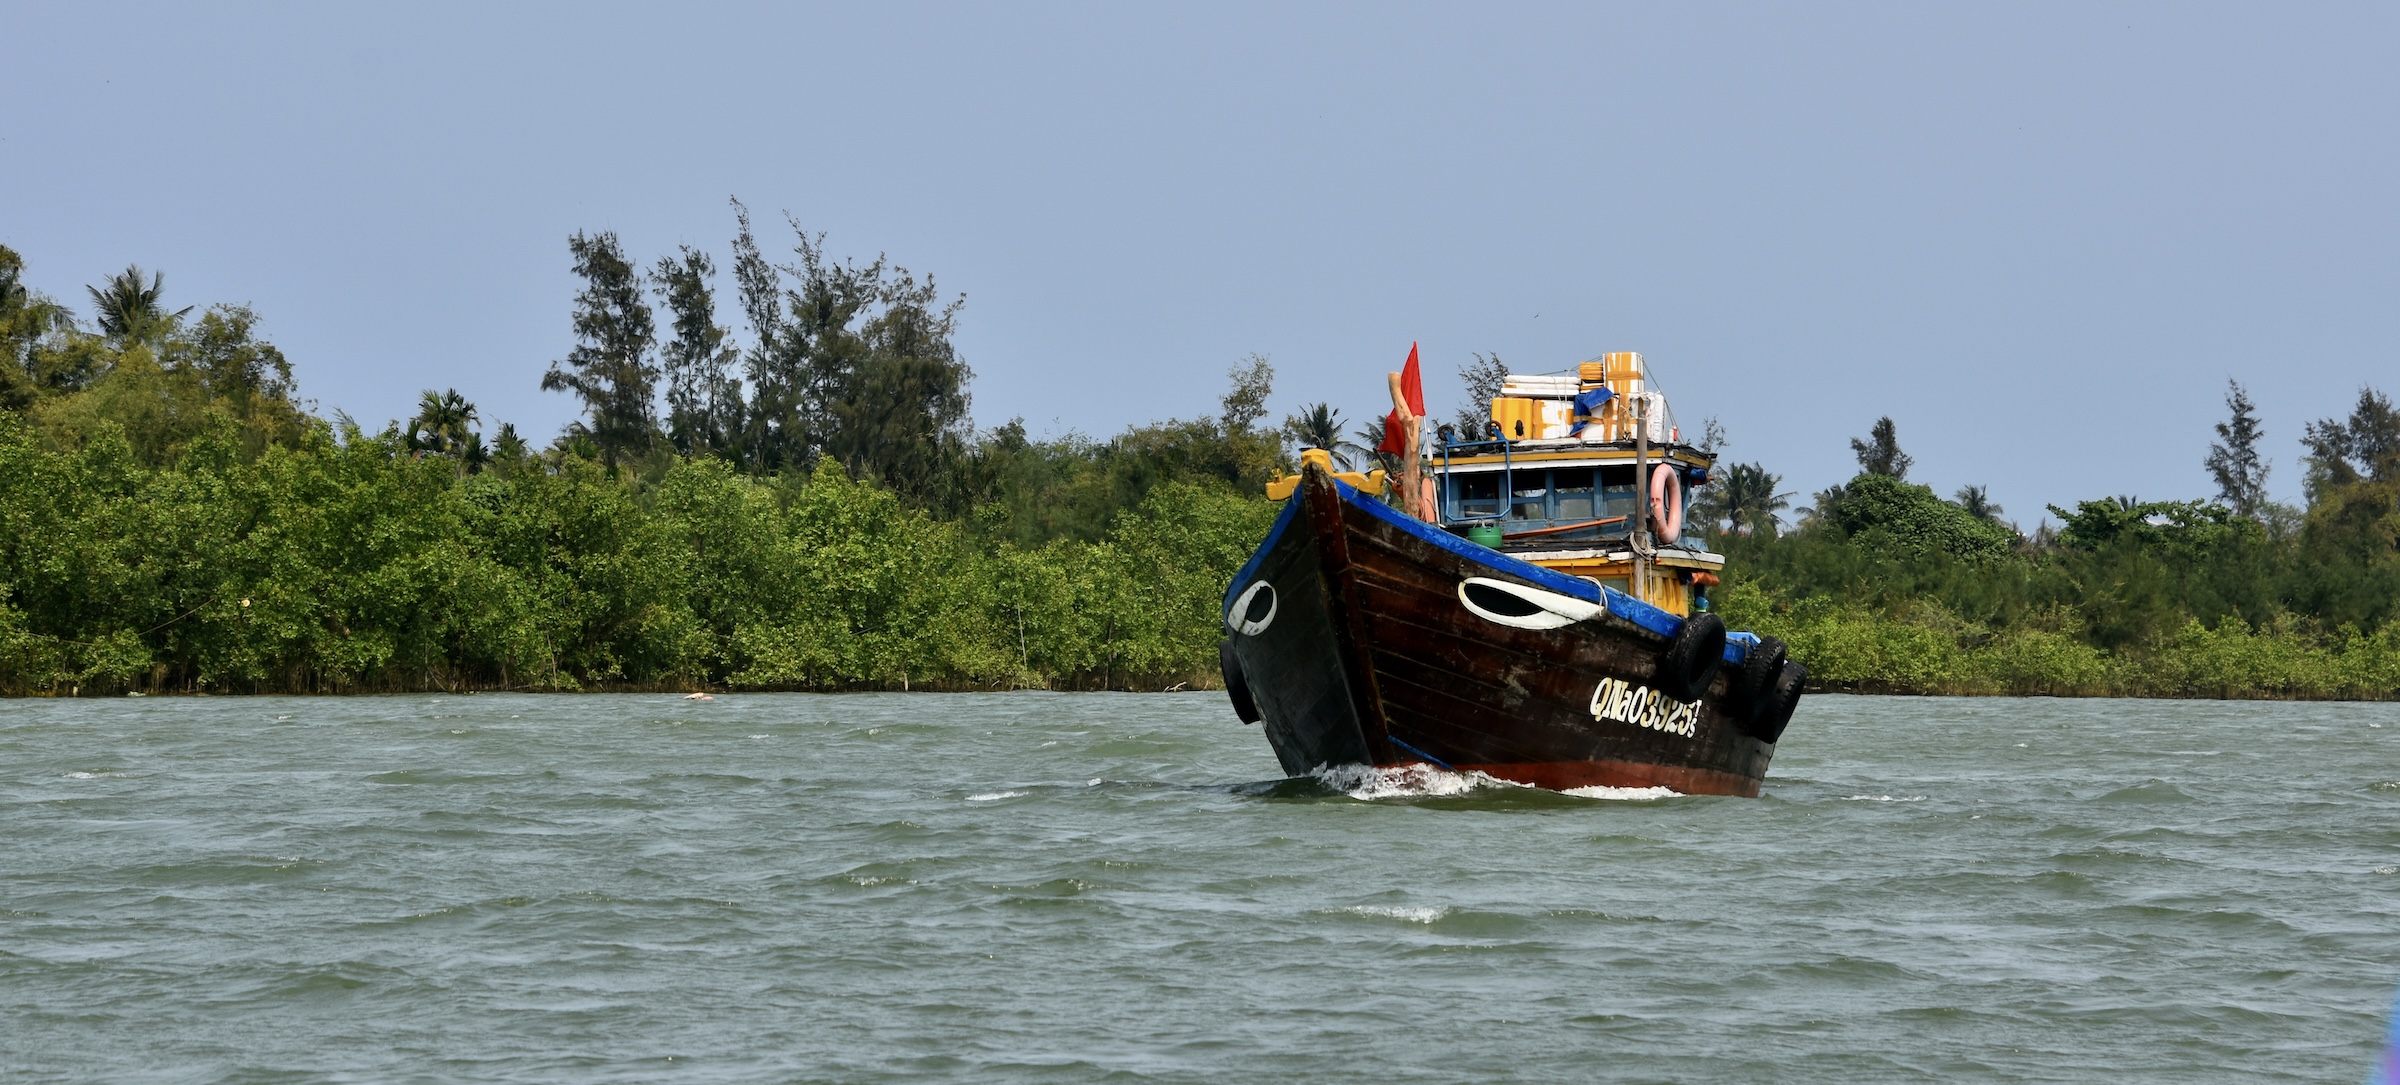 Vietnamese River Boat, Hoi An